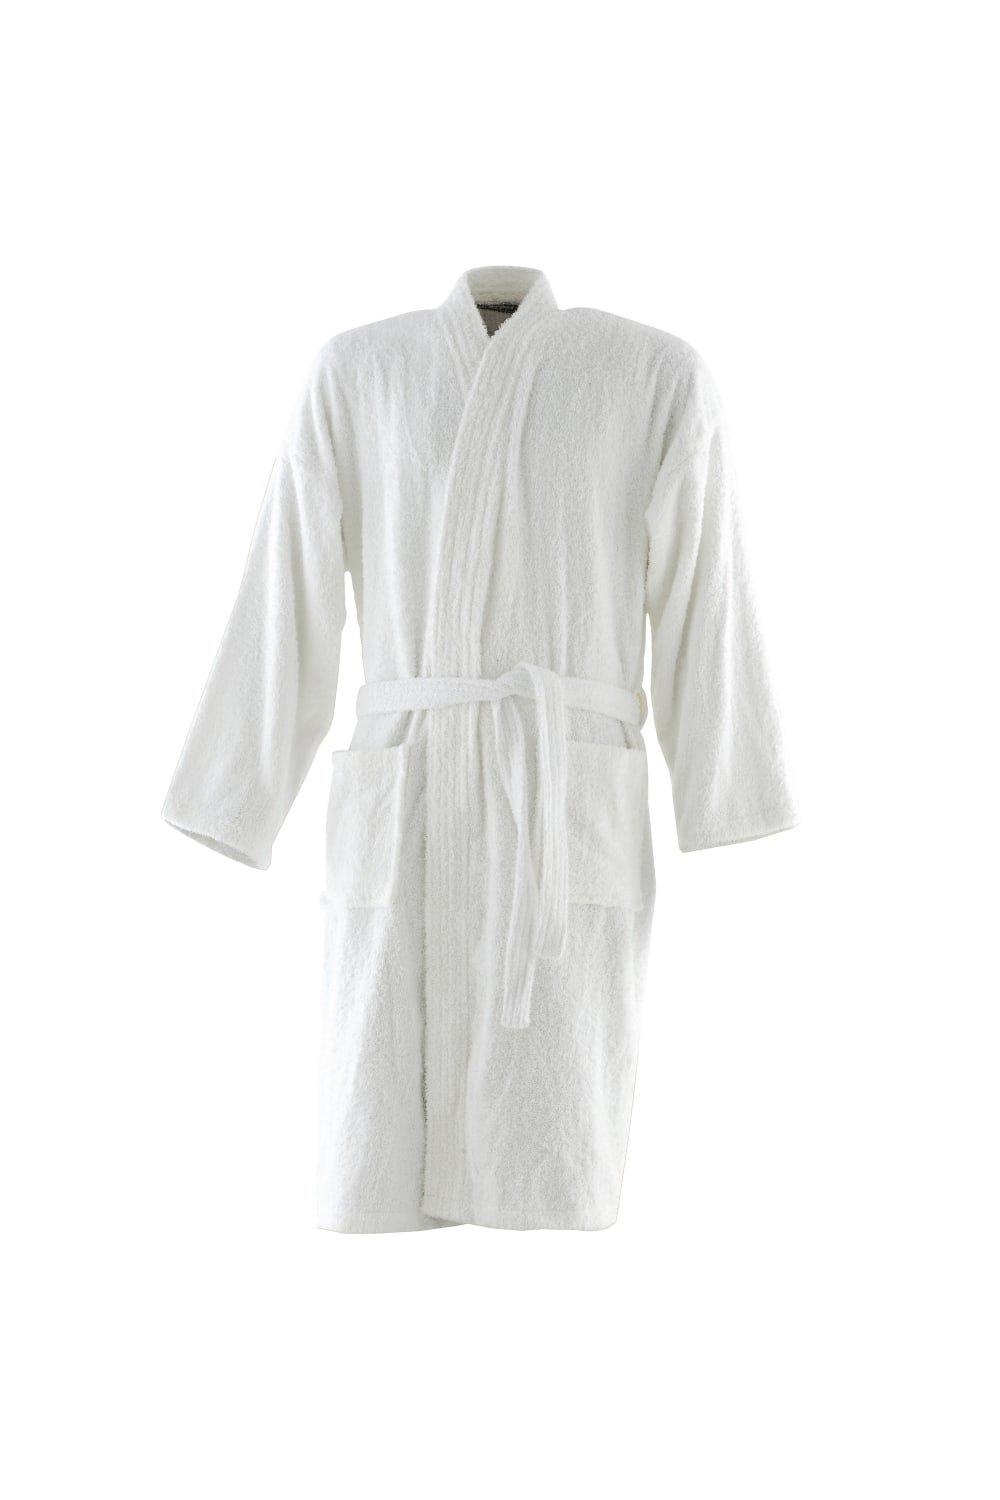 Kimono Bath Robe Towel (400 GSM)